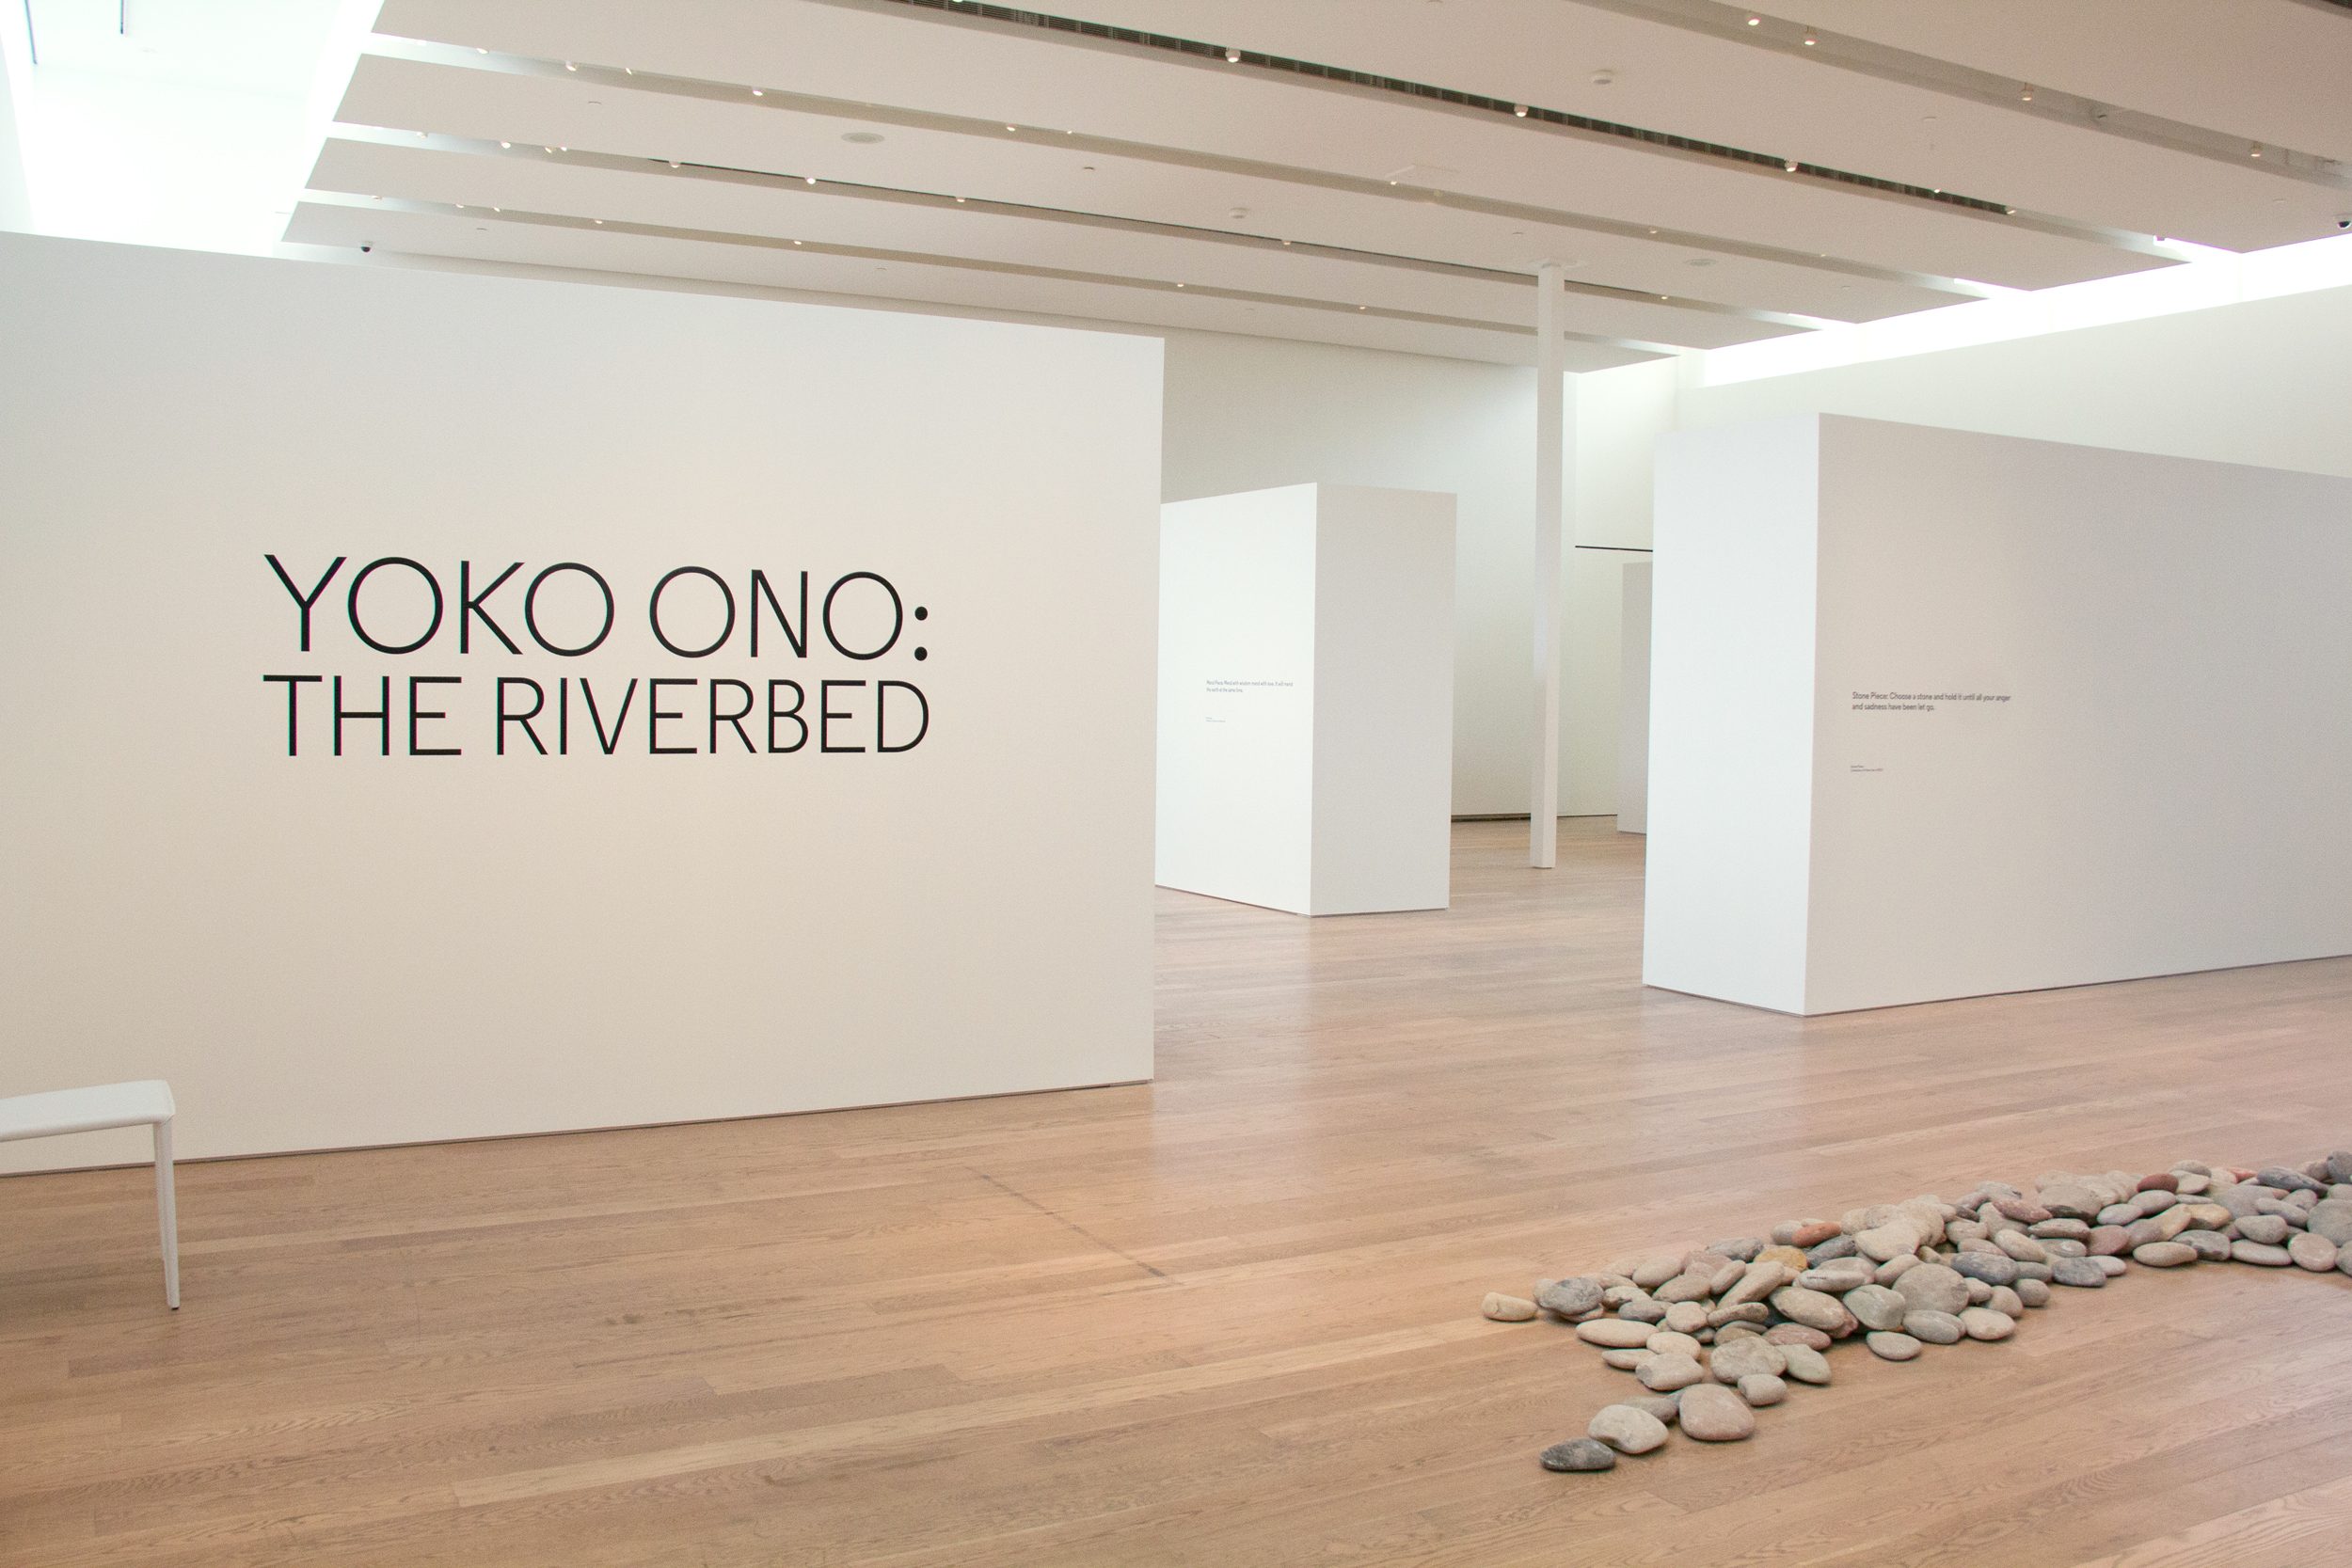 YOKO ONO: THE RIVERBED